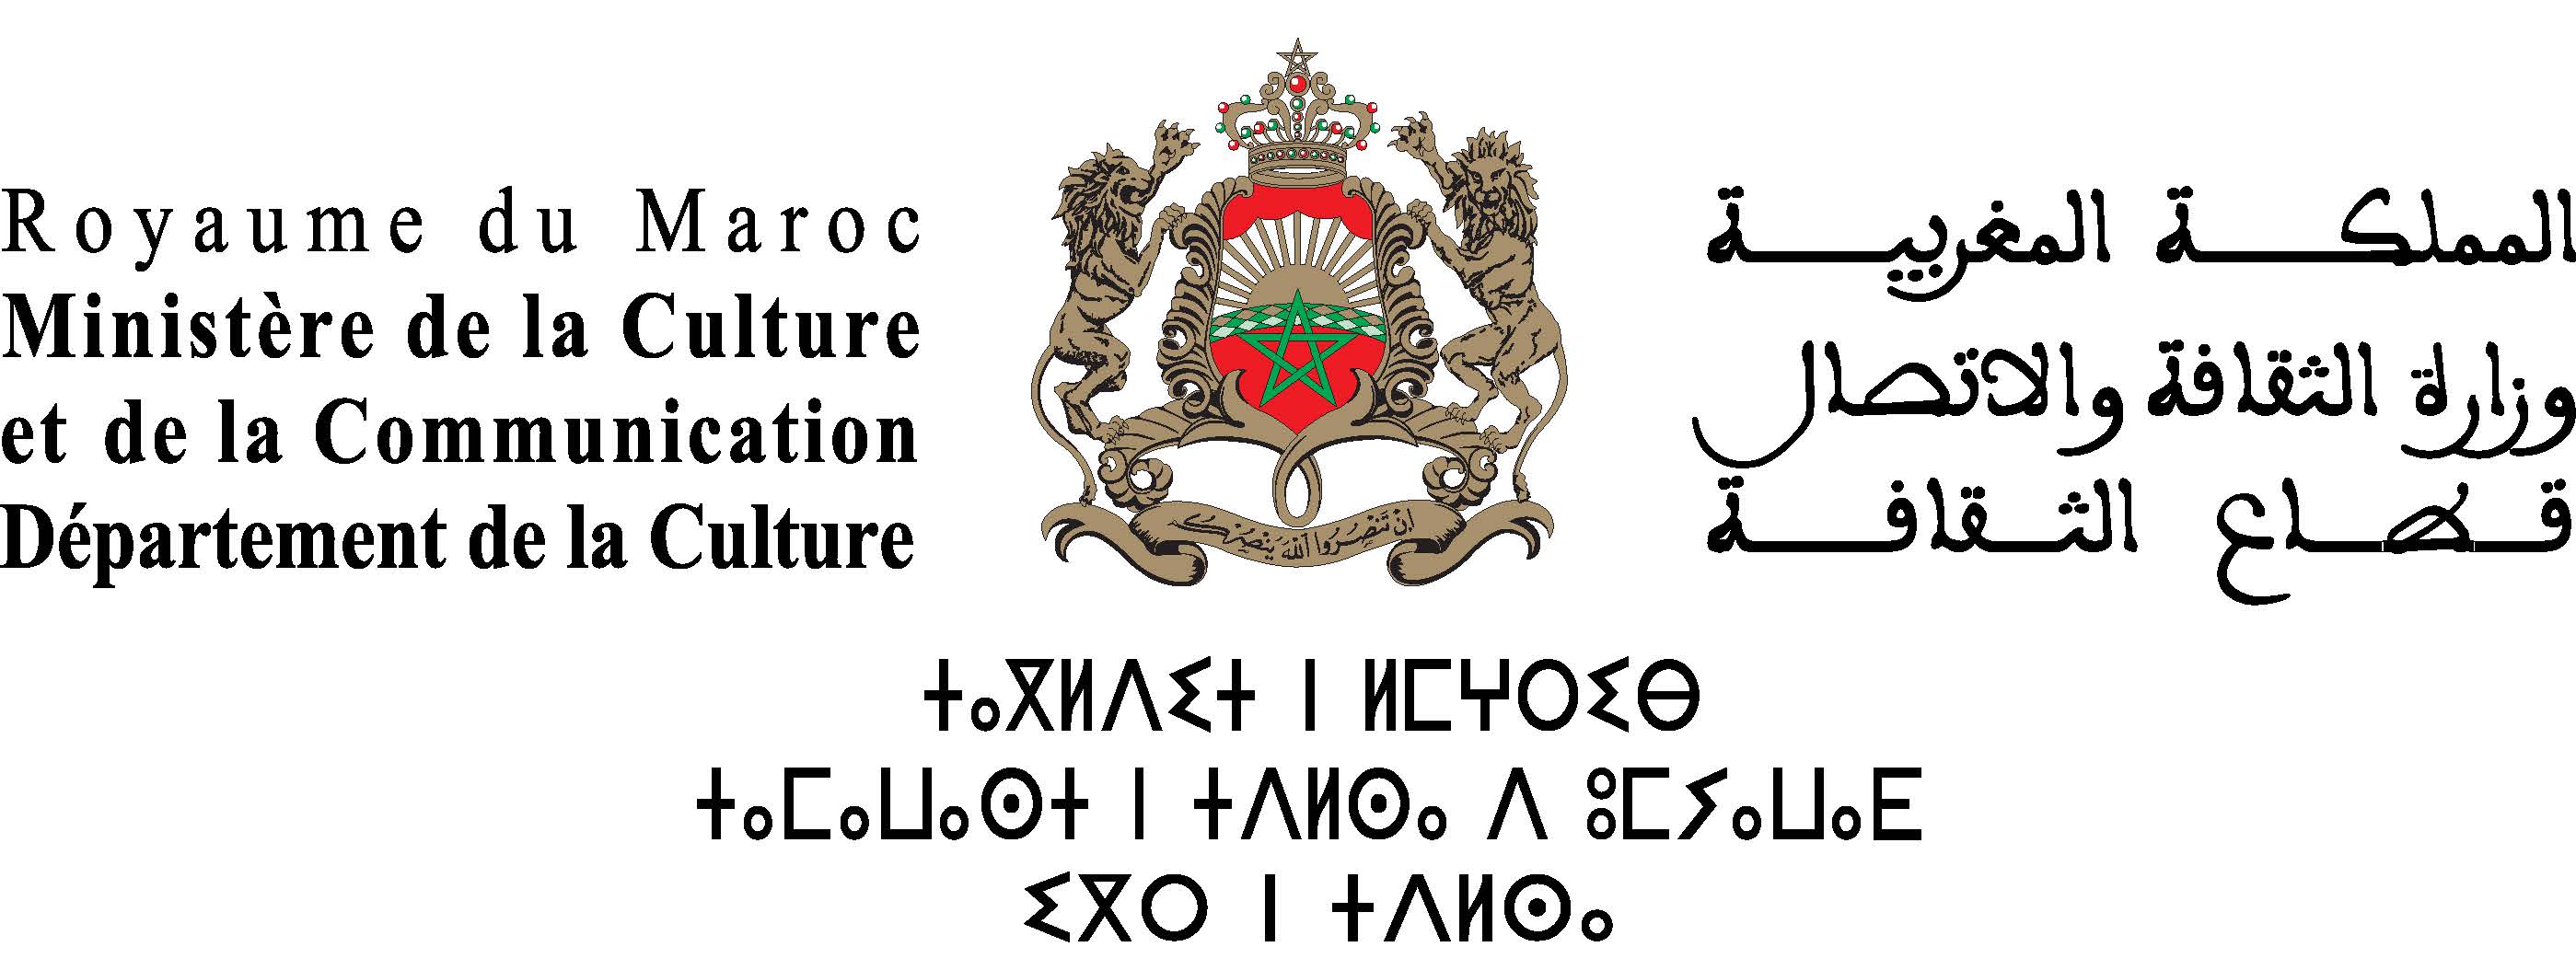 Ministerio de Cultura del Reino de Marruecos